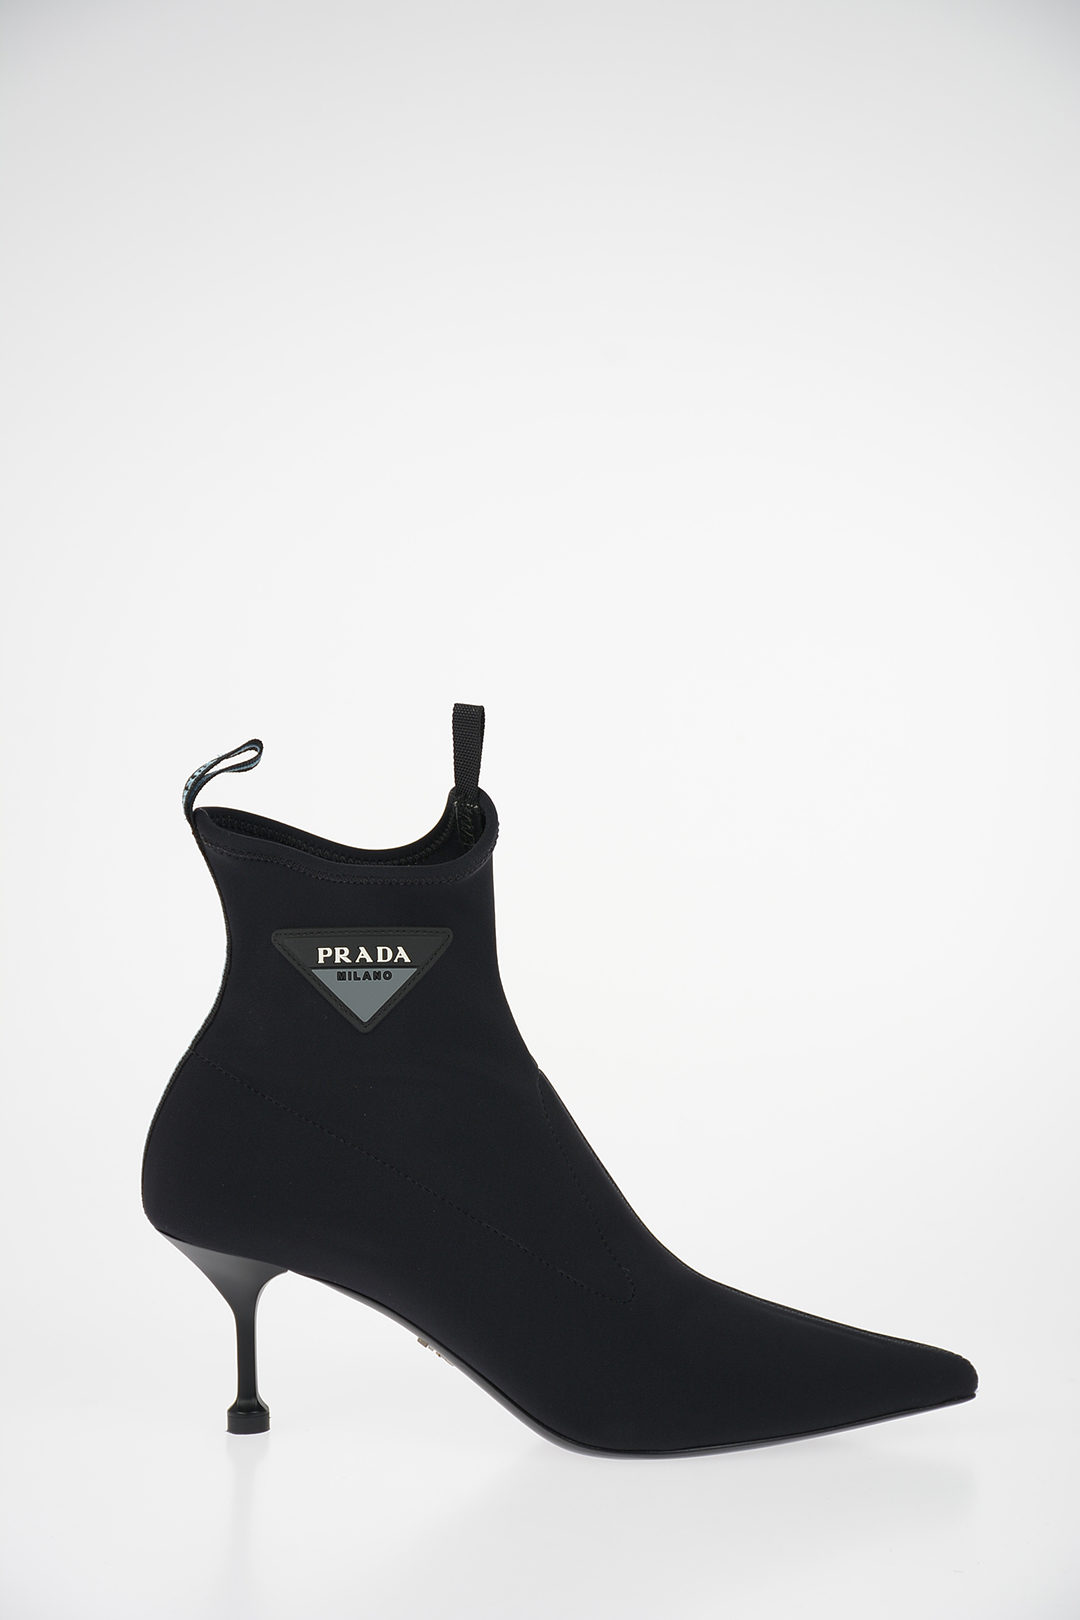 Prada 7cm Neoprene Ankle Boots women - Glamood Outlet